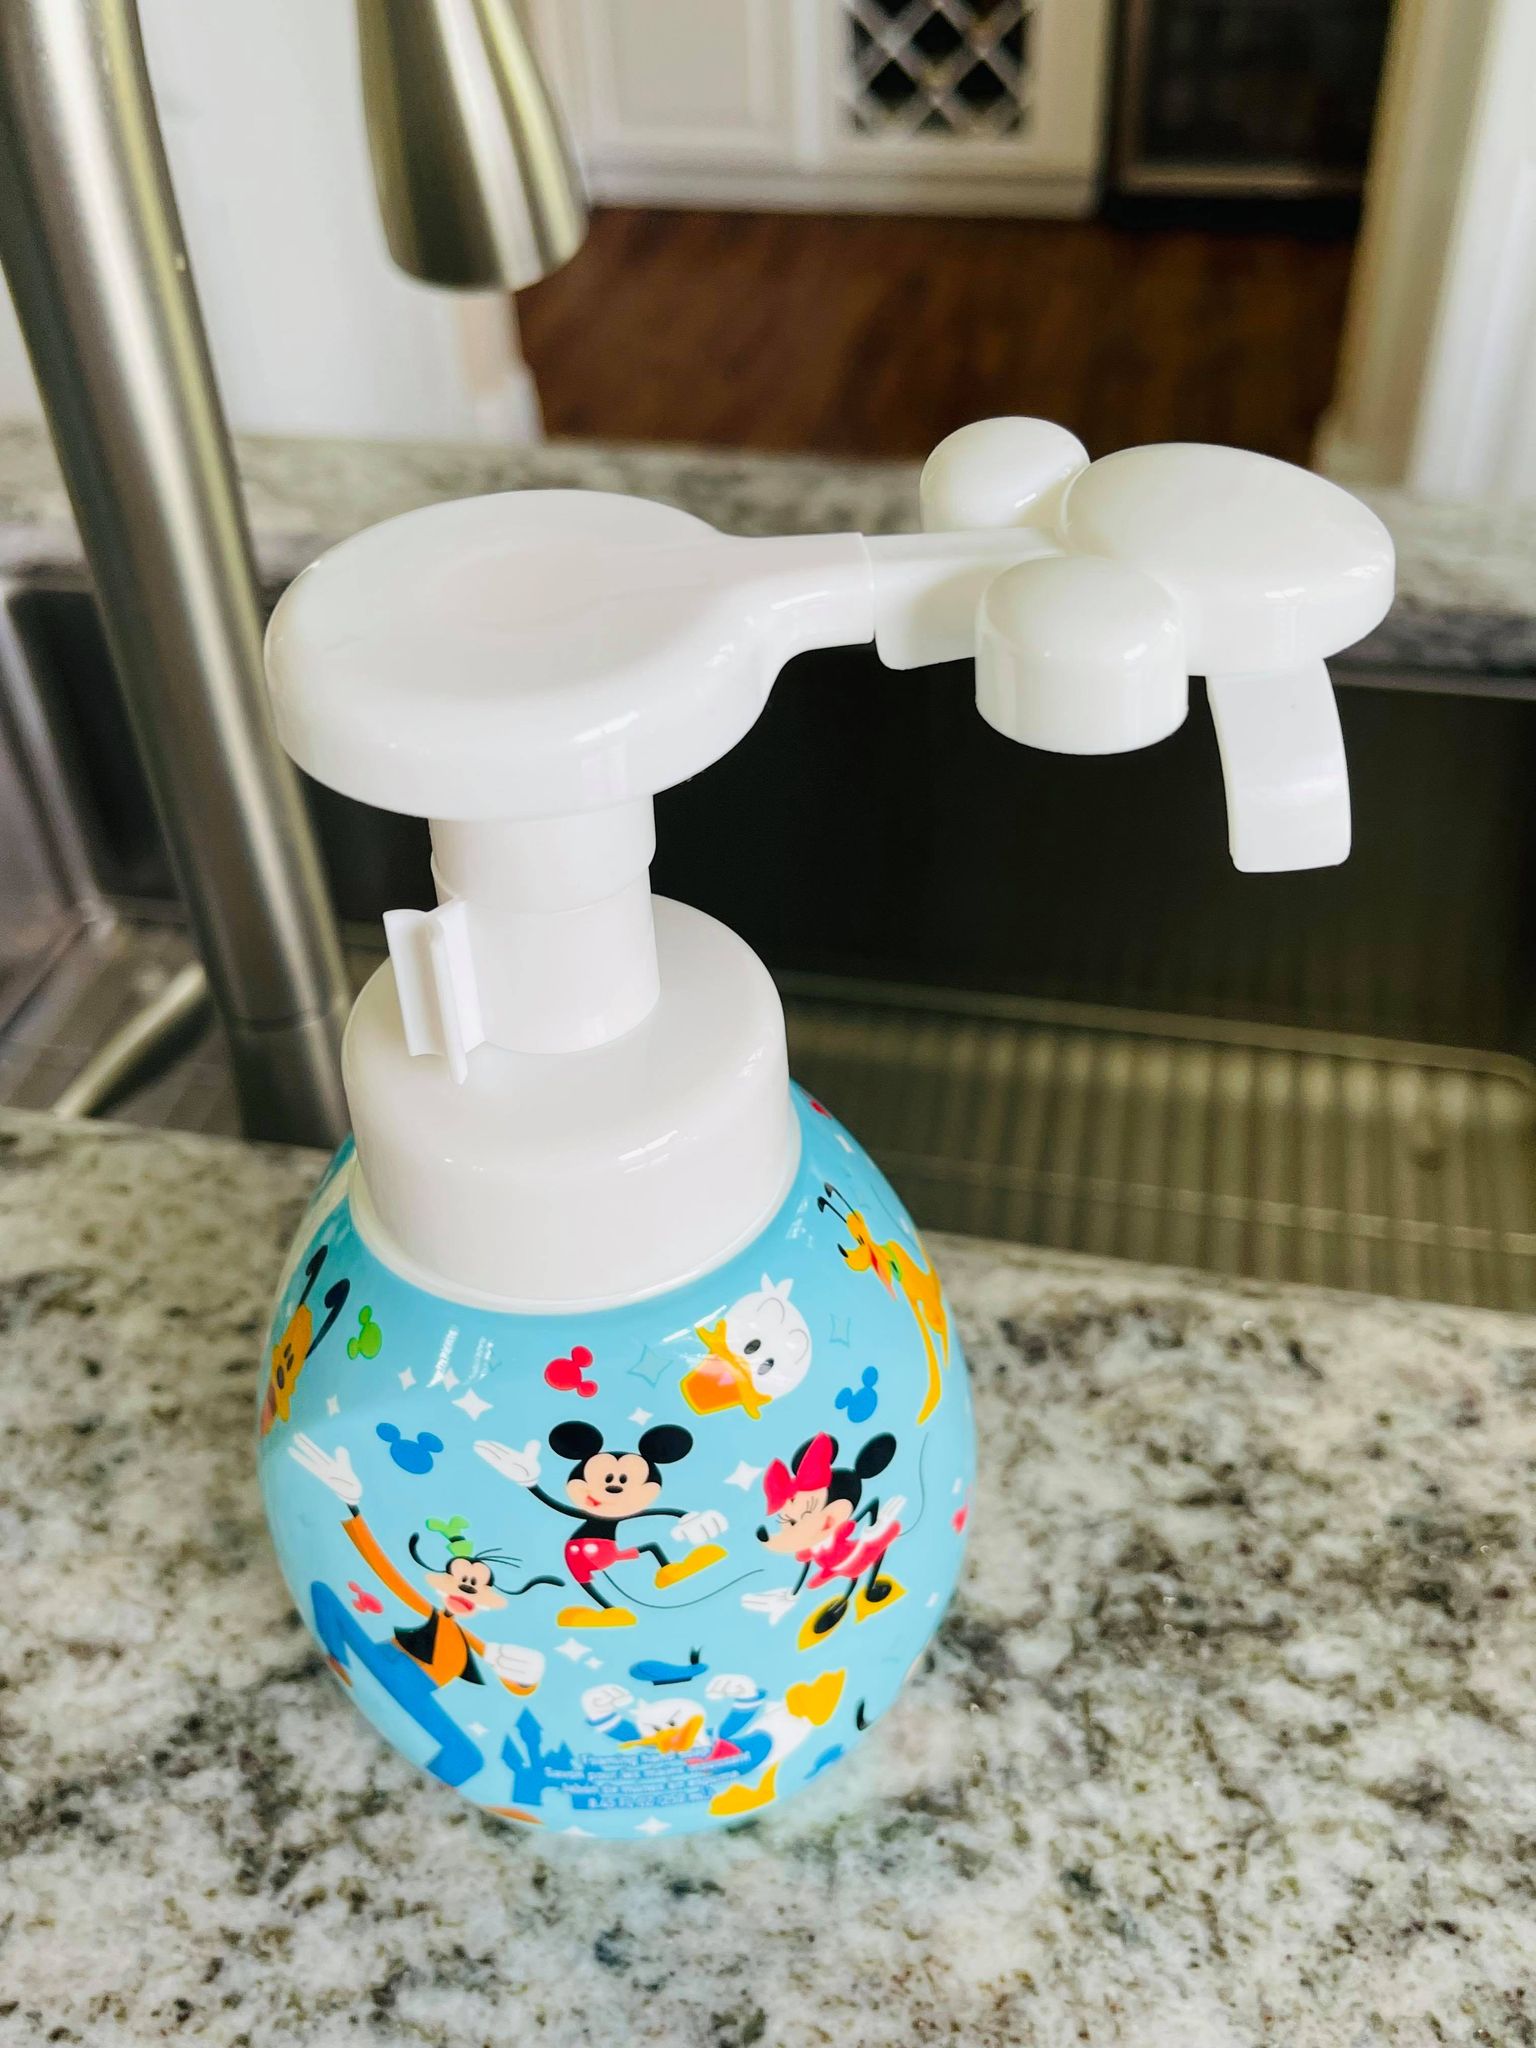 Mickey Head Soap Dispenser Back in Stock at Disney World